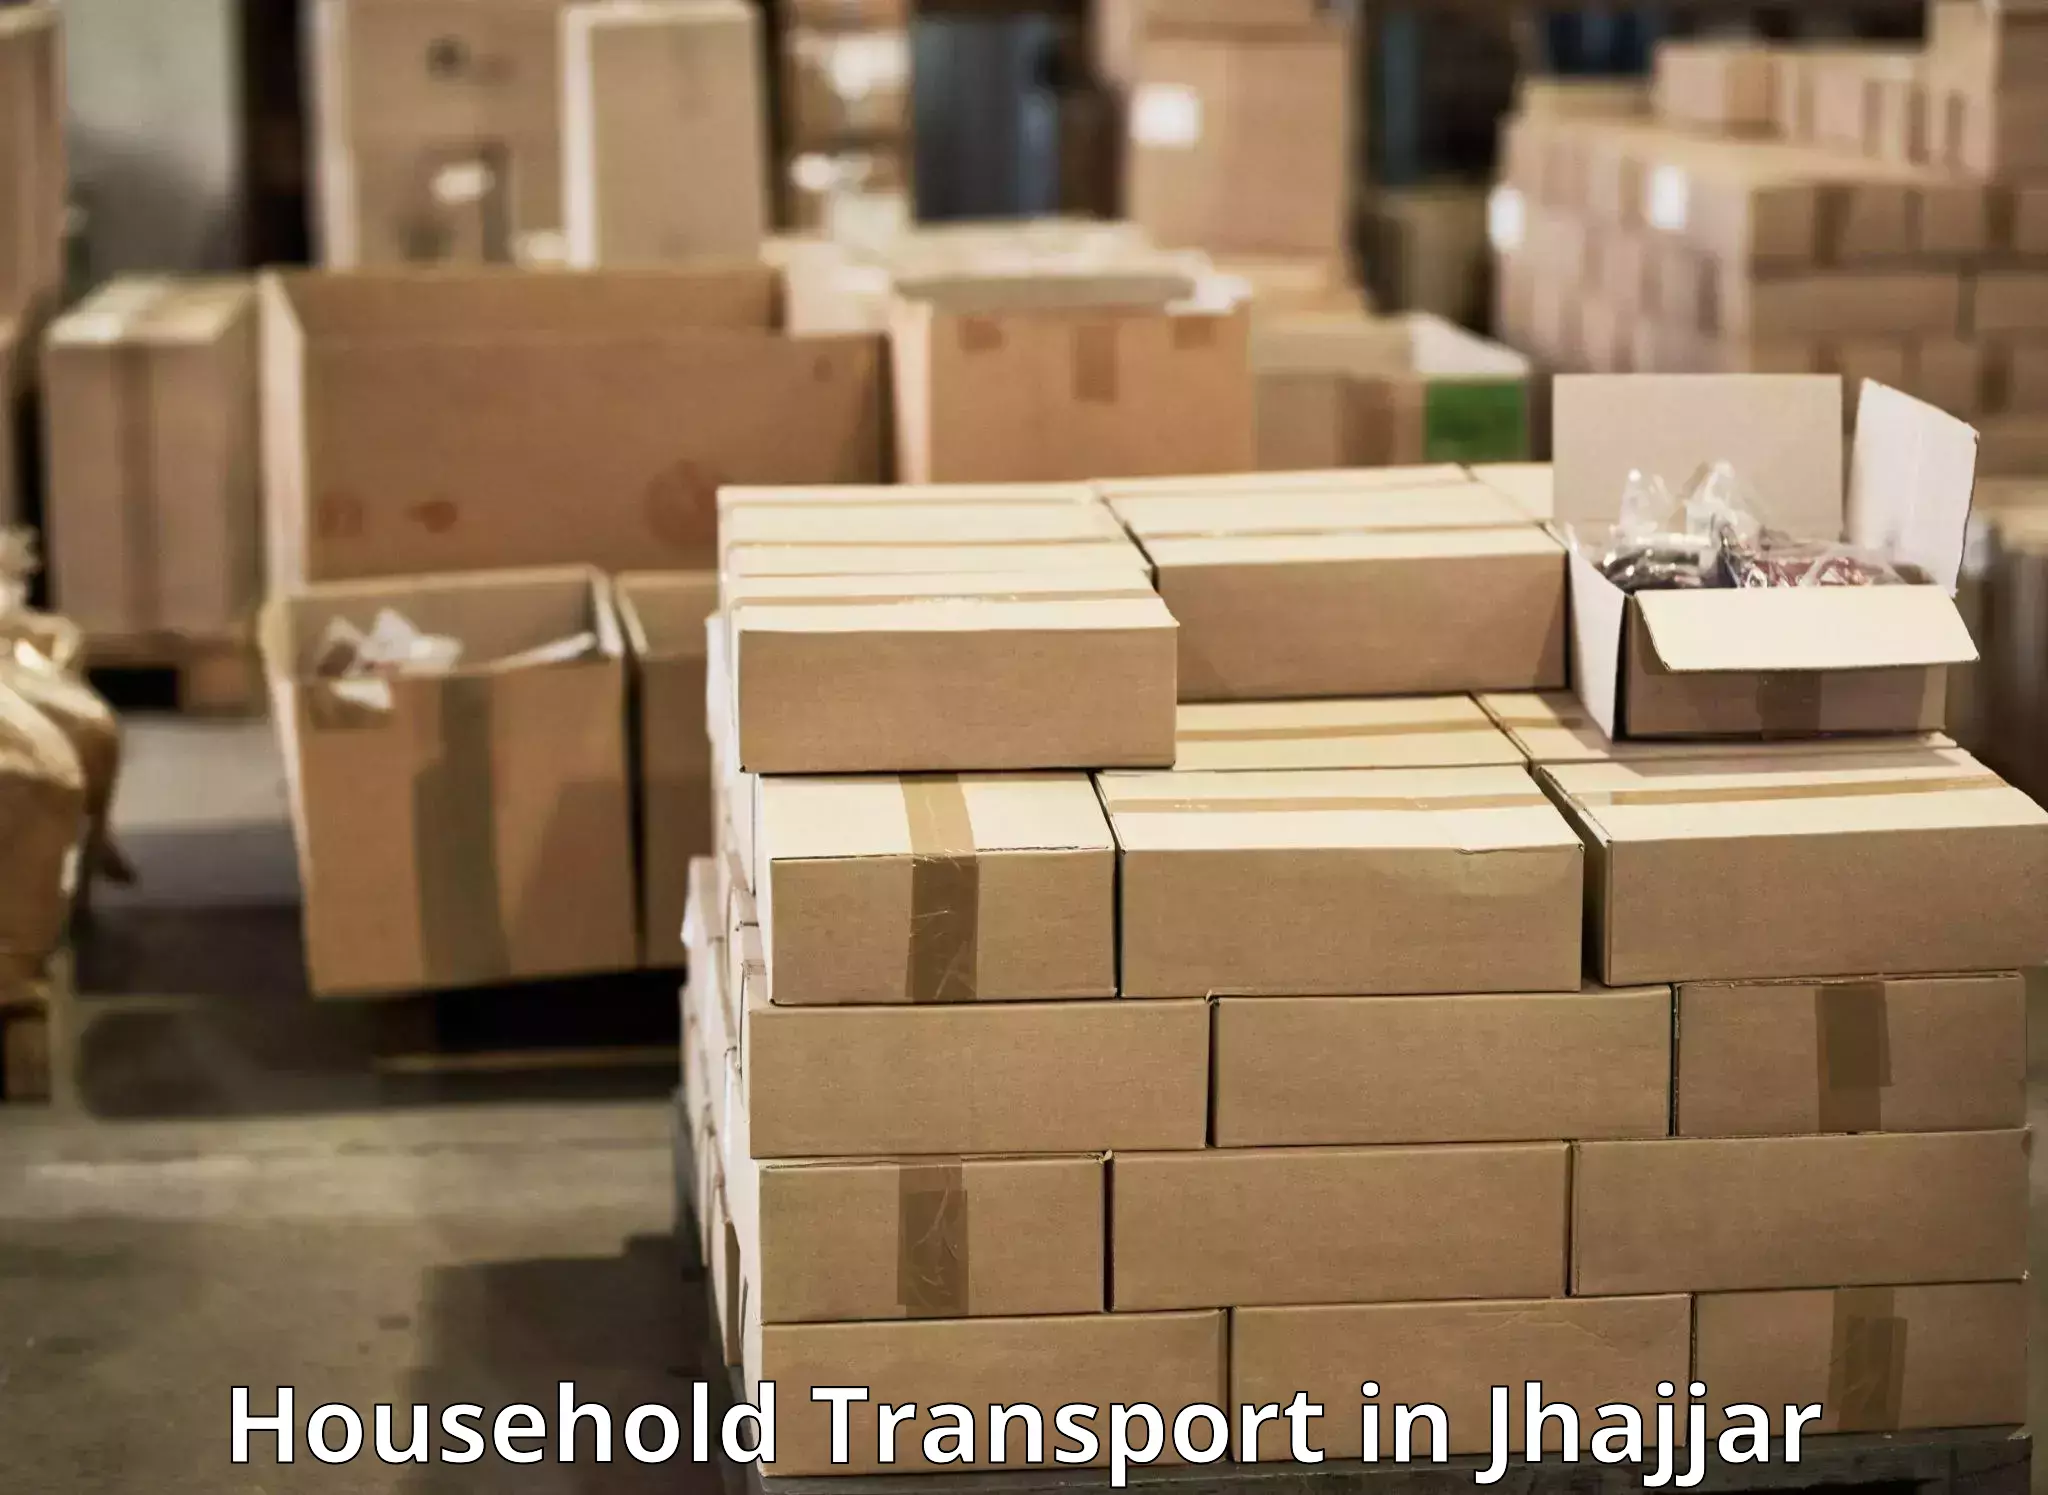 Quality household transport in Jhajjar